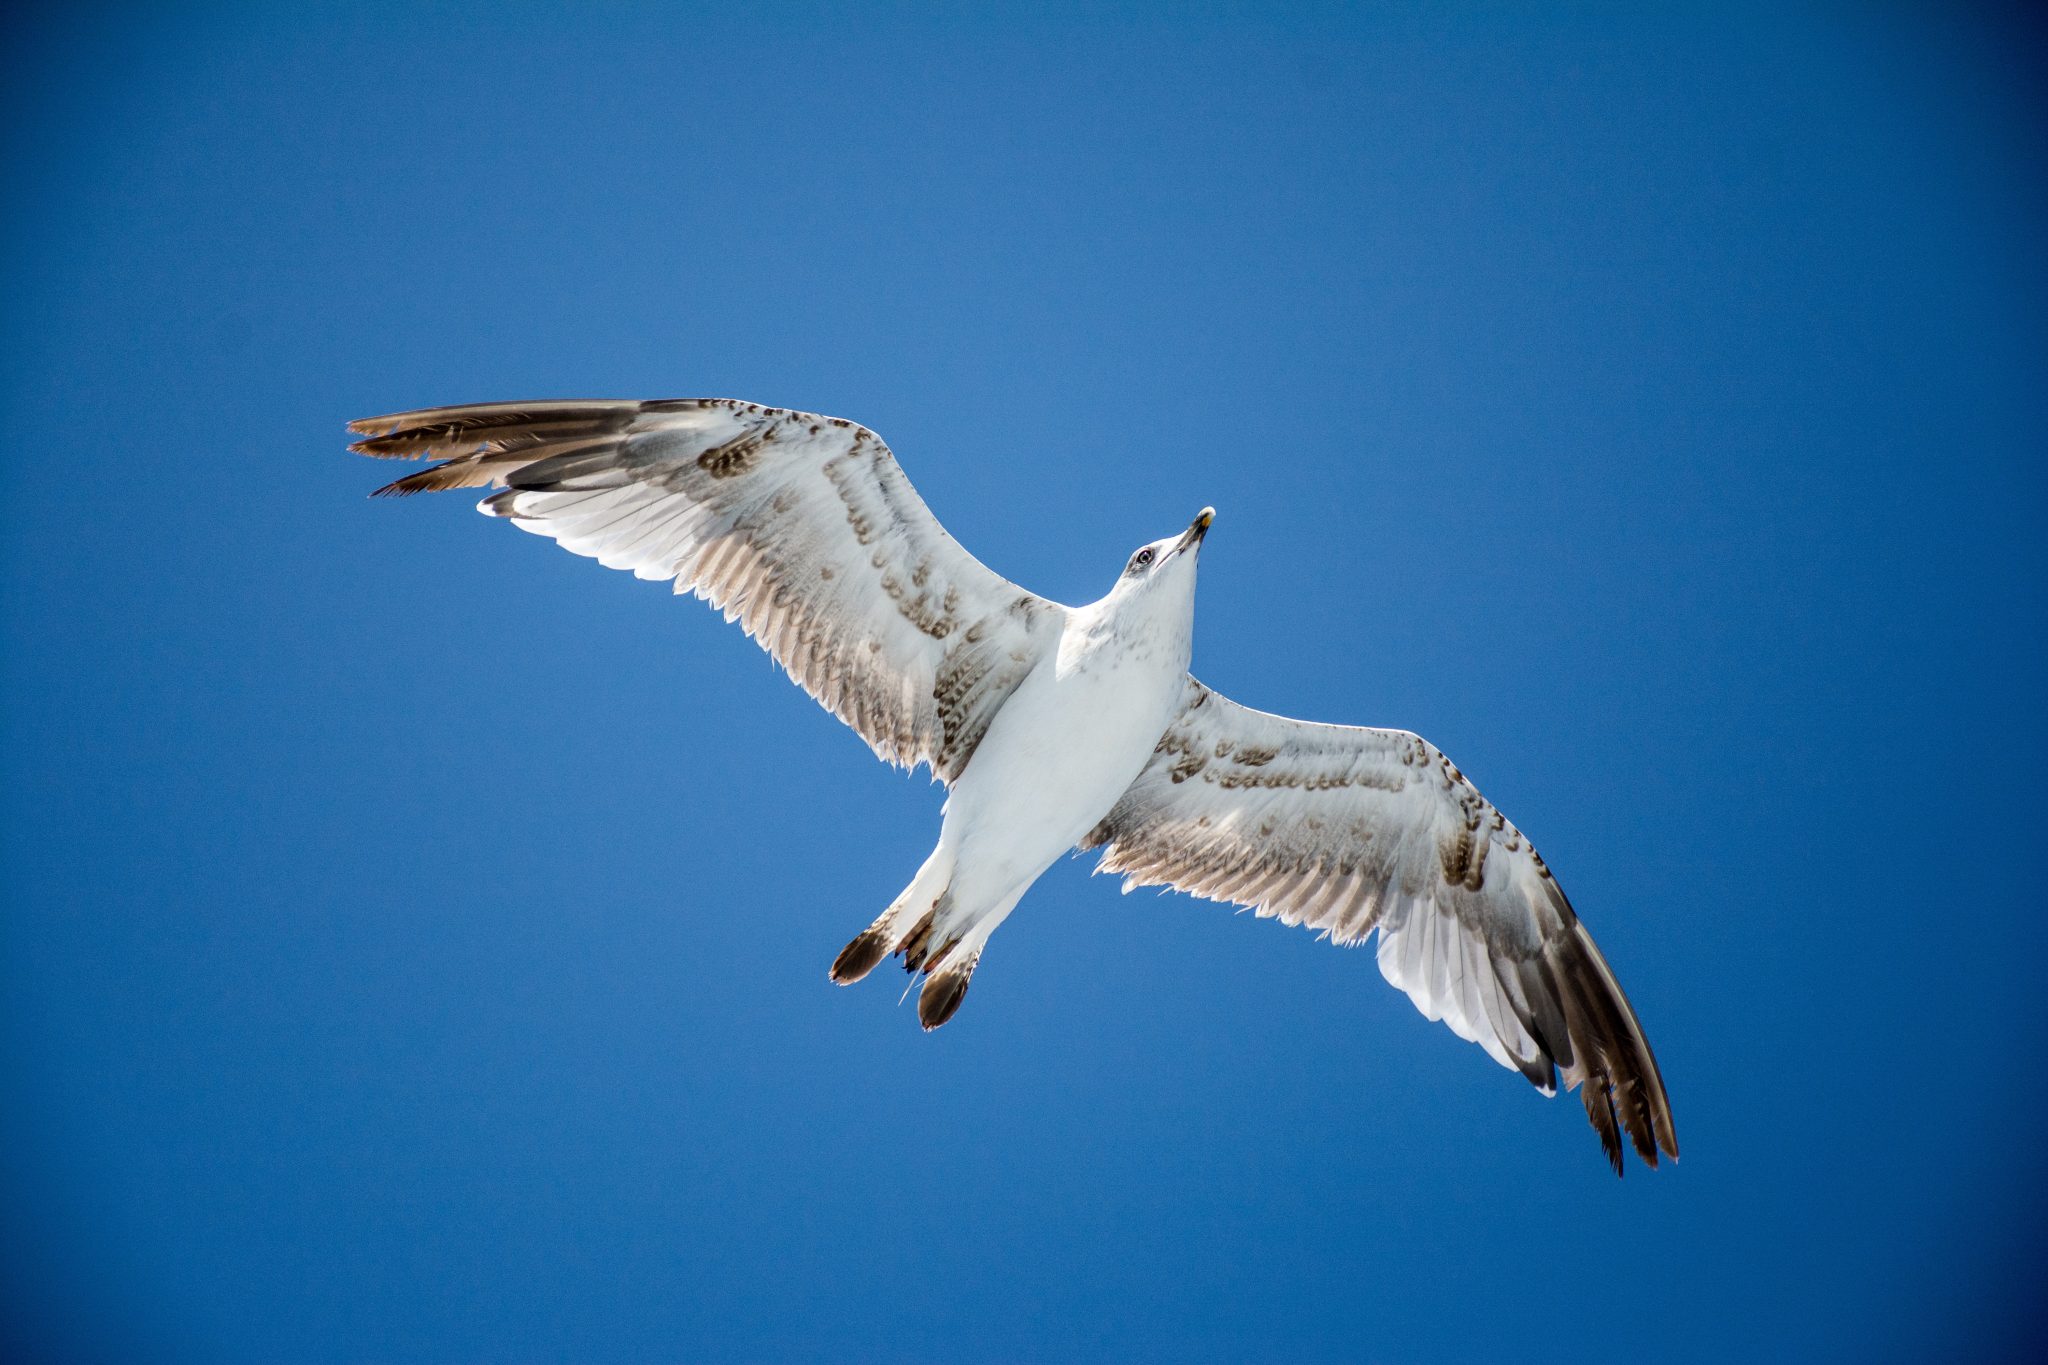 Seagull, Bird, Flying, Animal, Sky, Outdoors, Animal, Wildlife, Animal